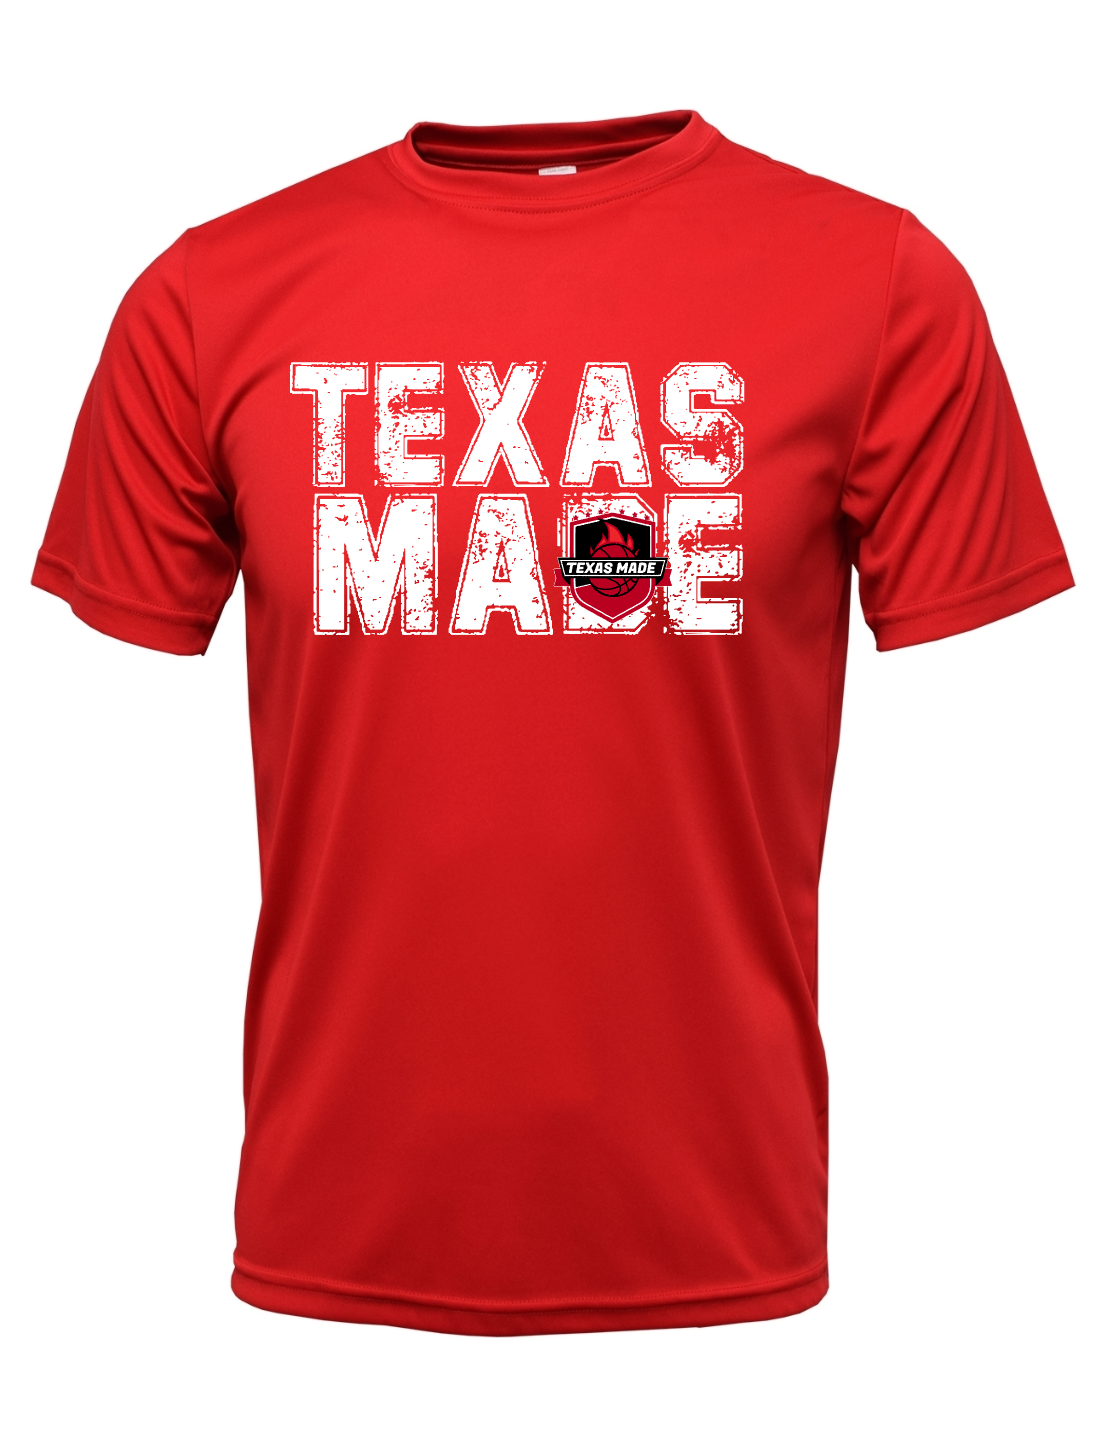 Texas Made - TEXAS MADE - Red Performance Tee